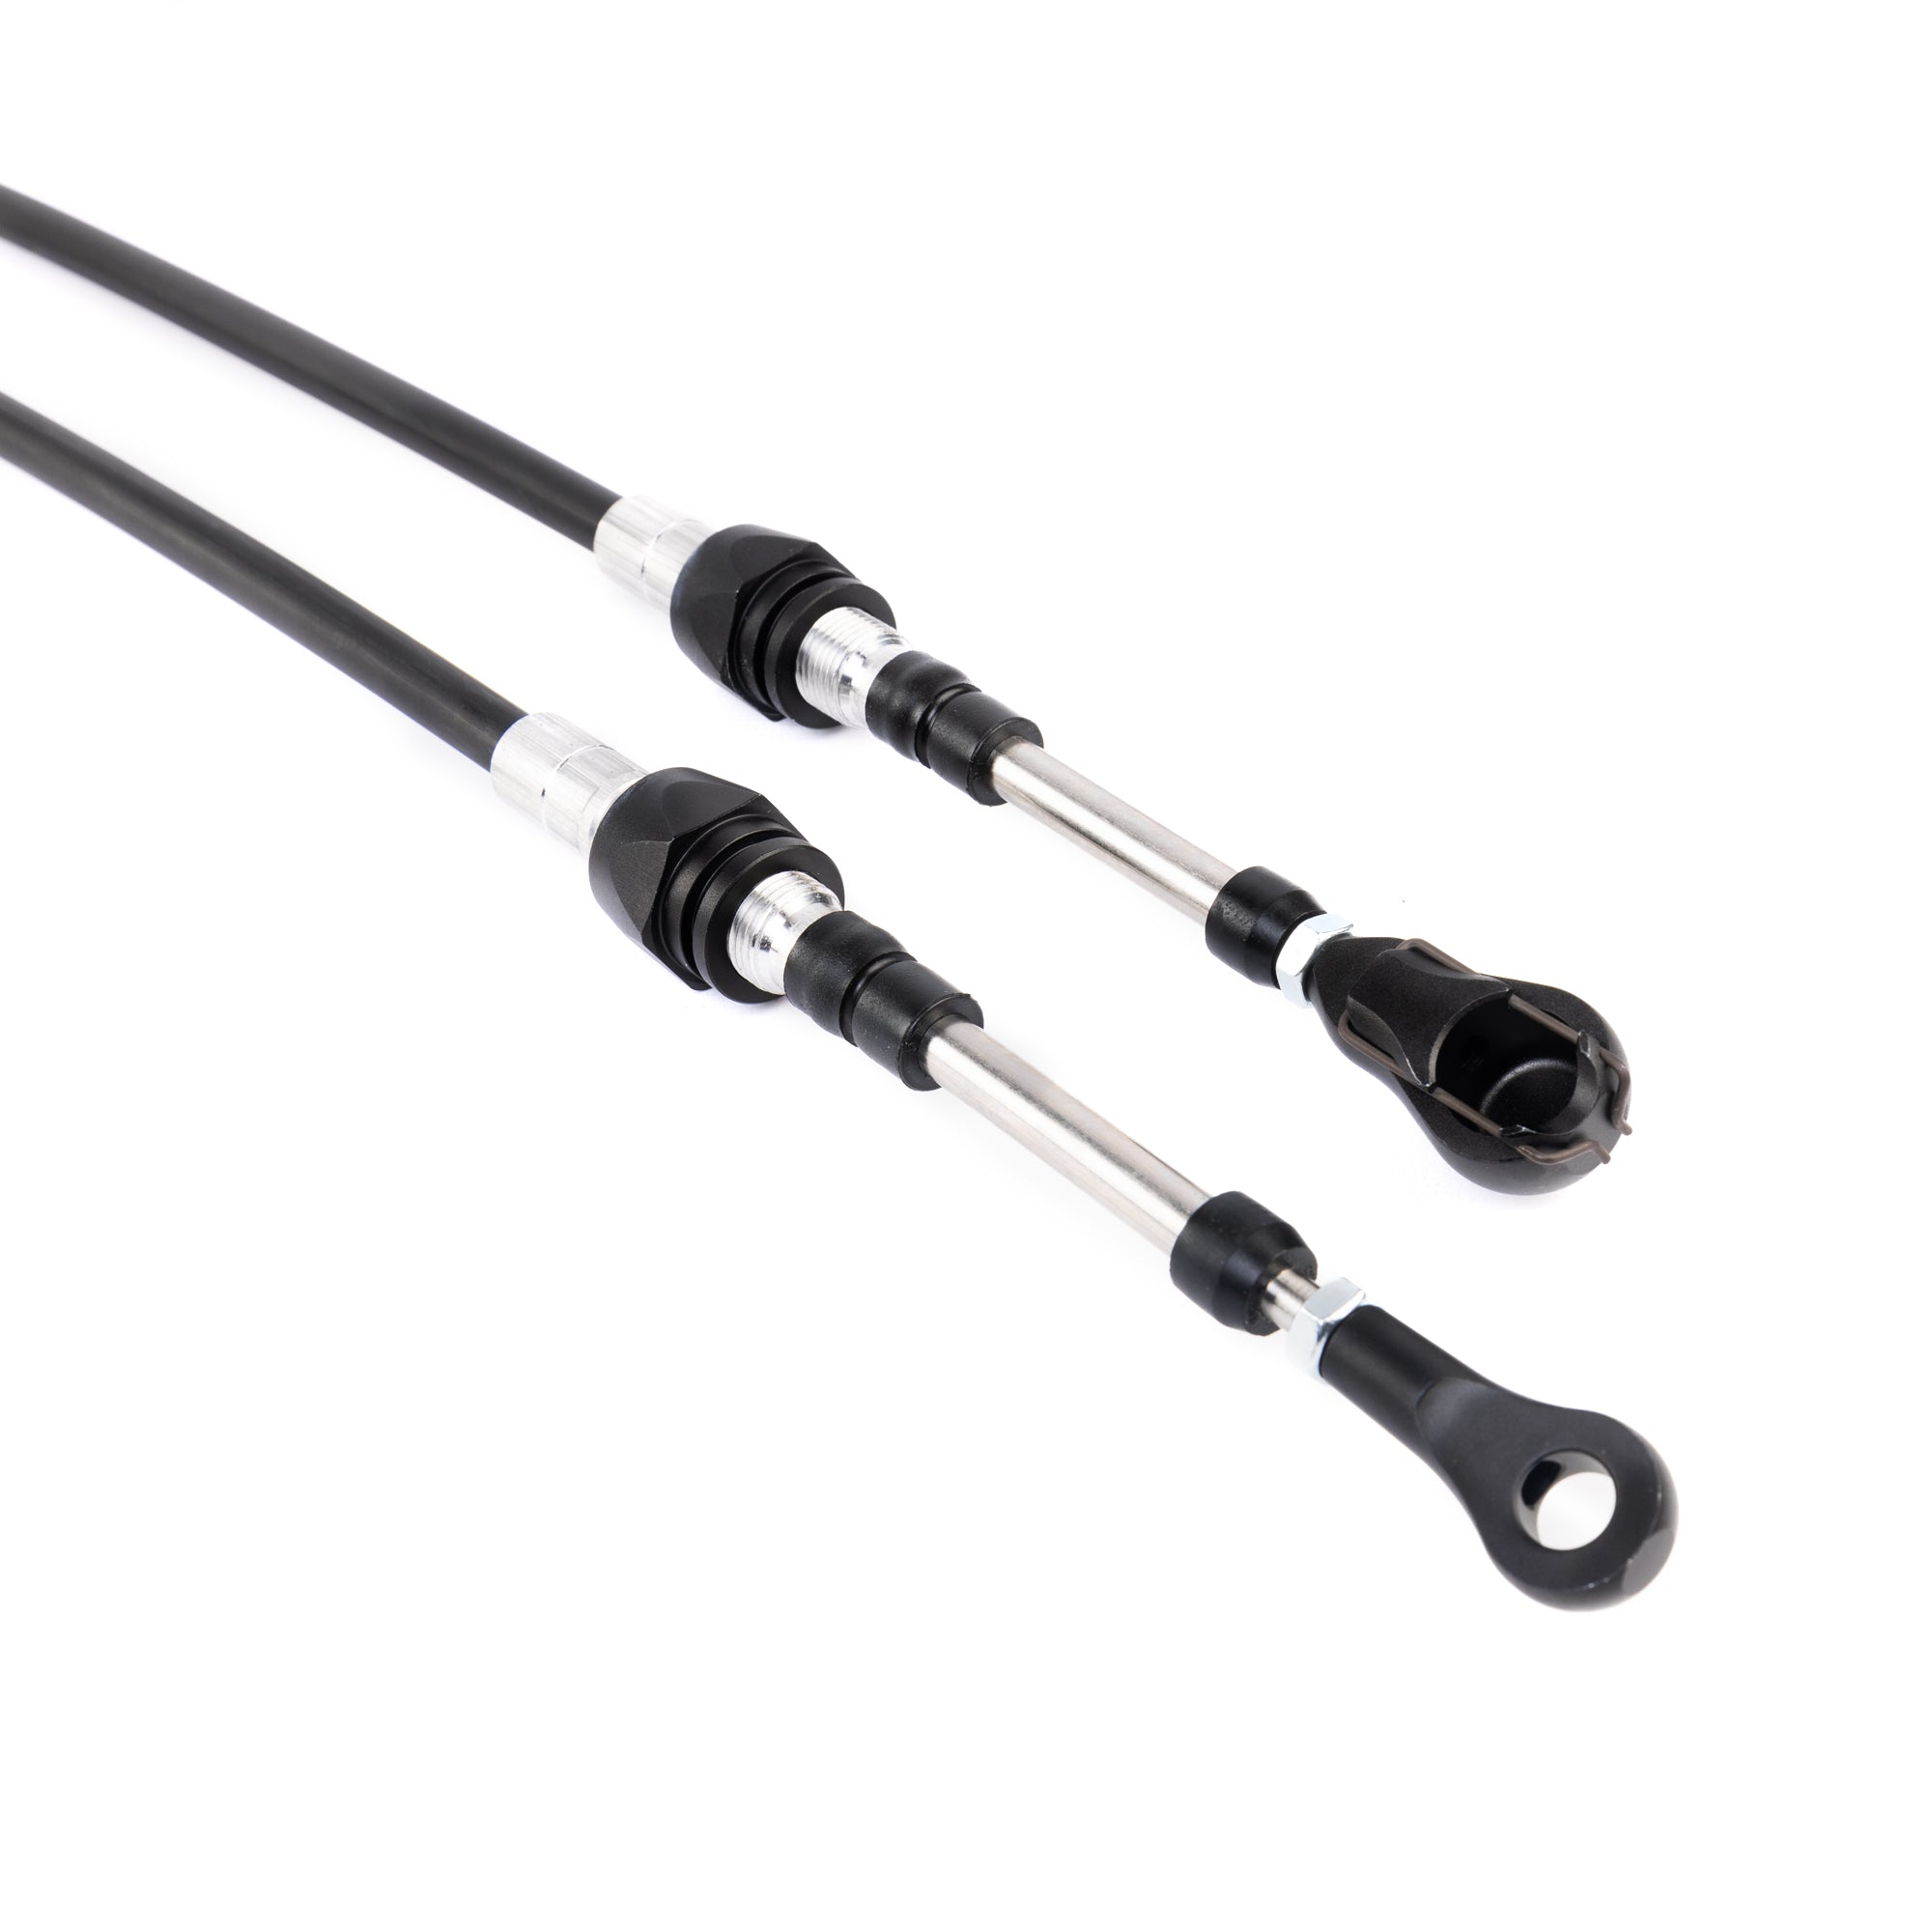 Honda Sound Works Premium Love Cable 3m - 楽器/器材